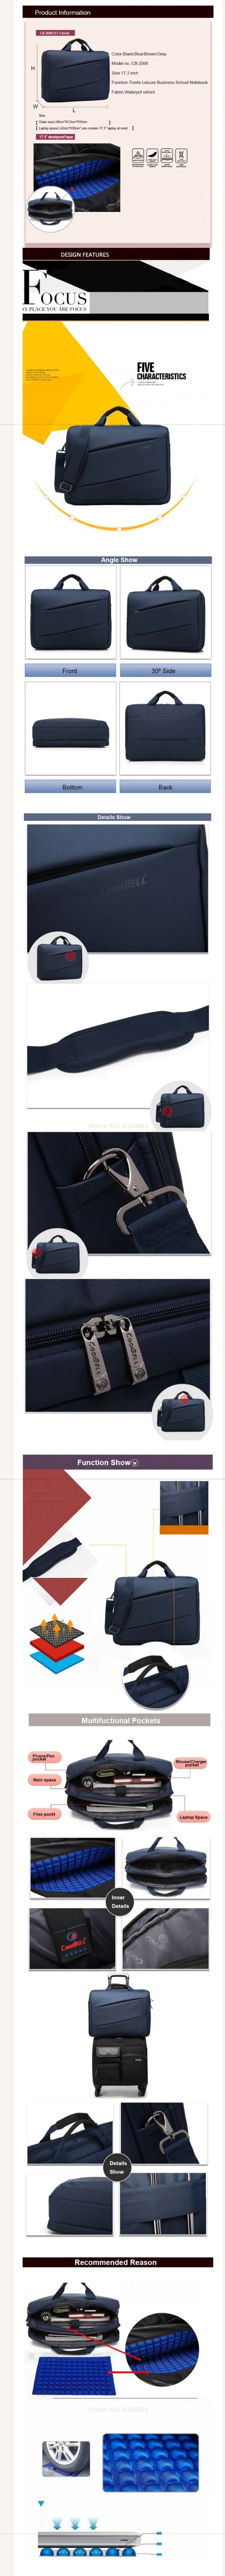 6205-coolbell-handbag-laptop-features